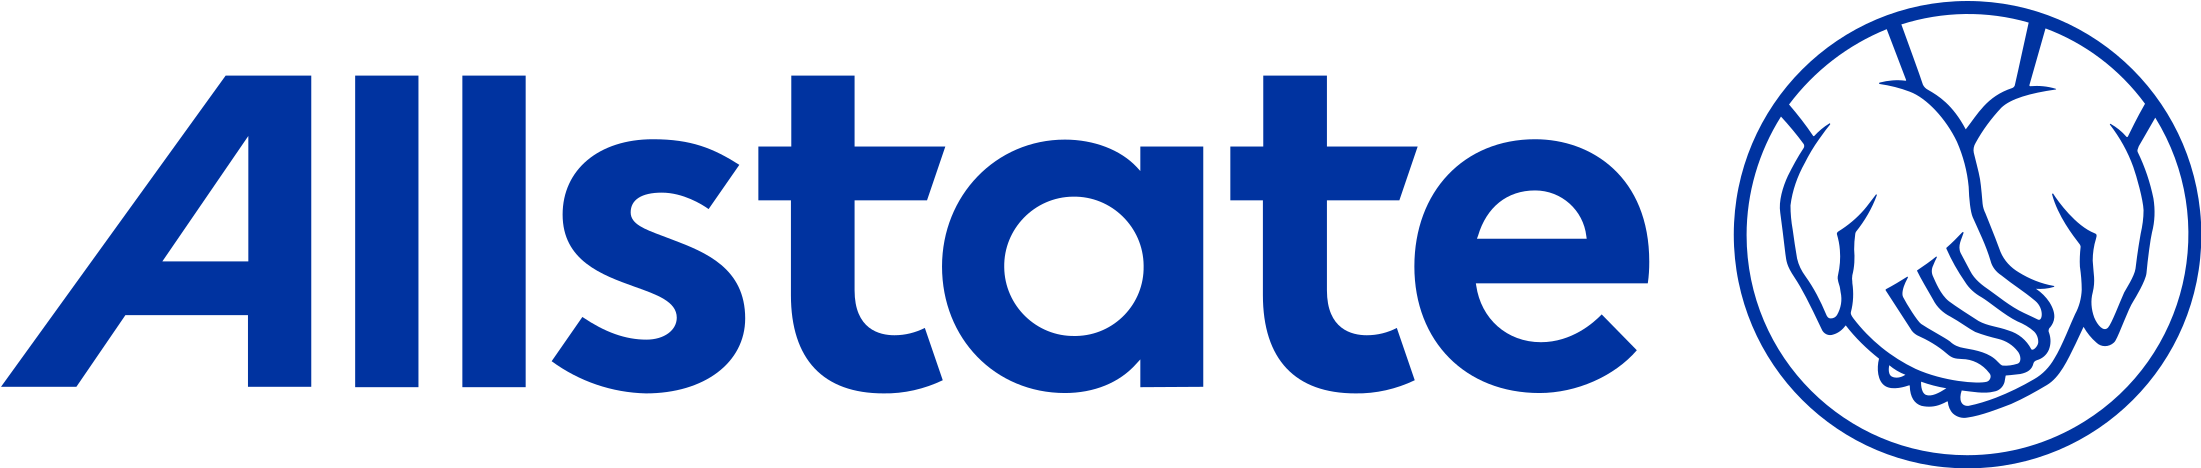 Allstate-Logo-PNG-Datei